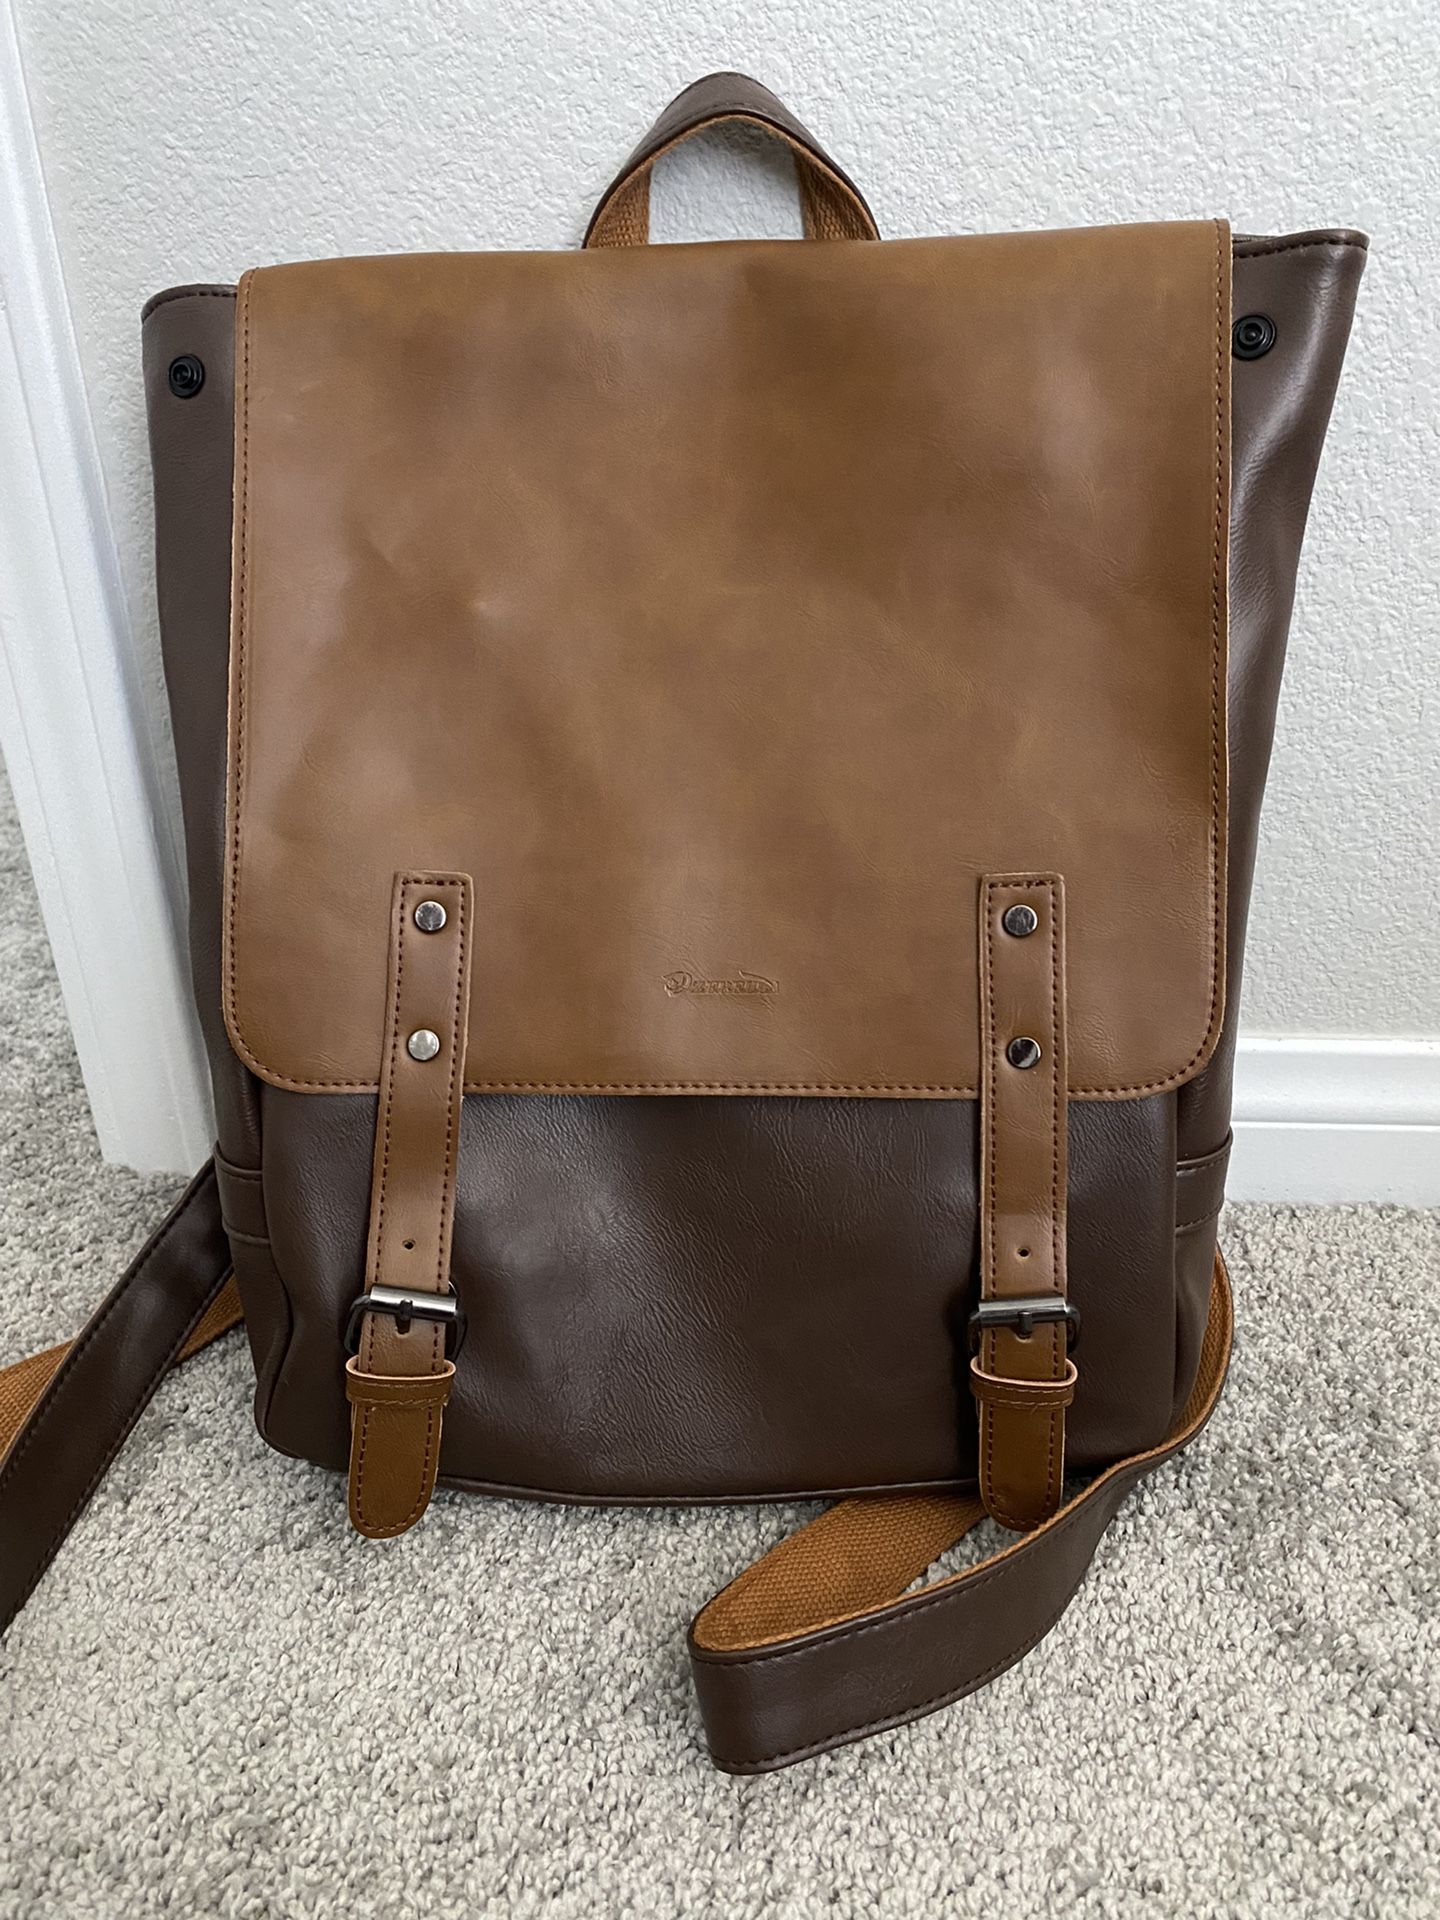 Leather Messenger Bag- Like New